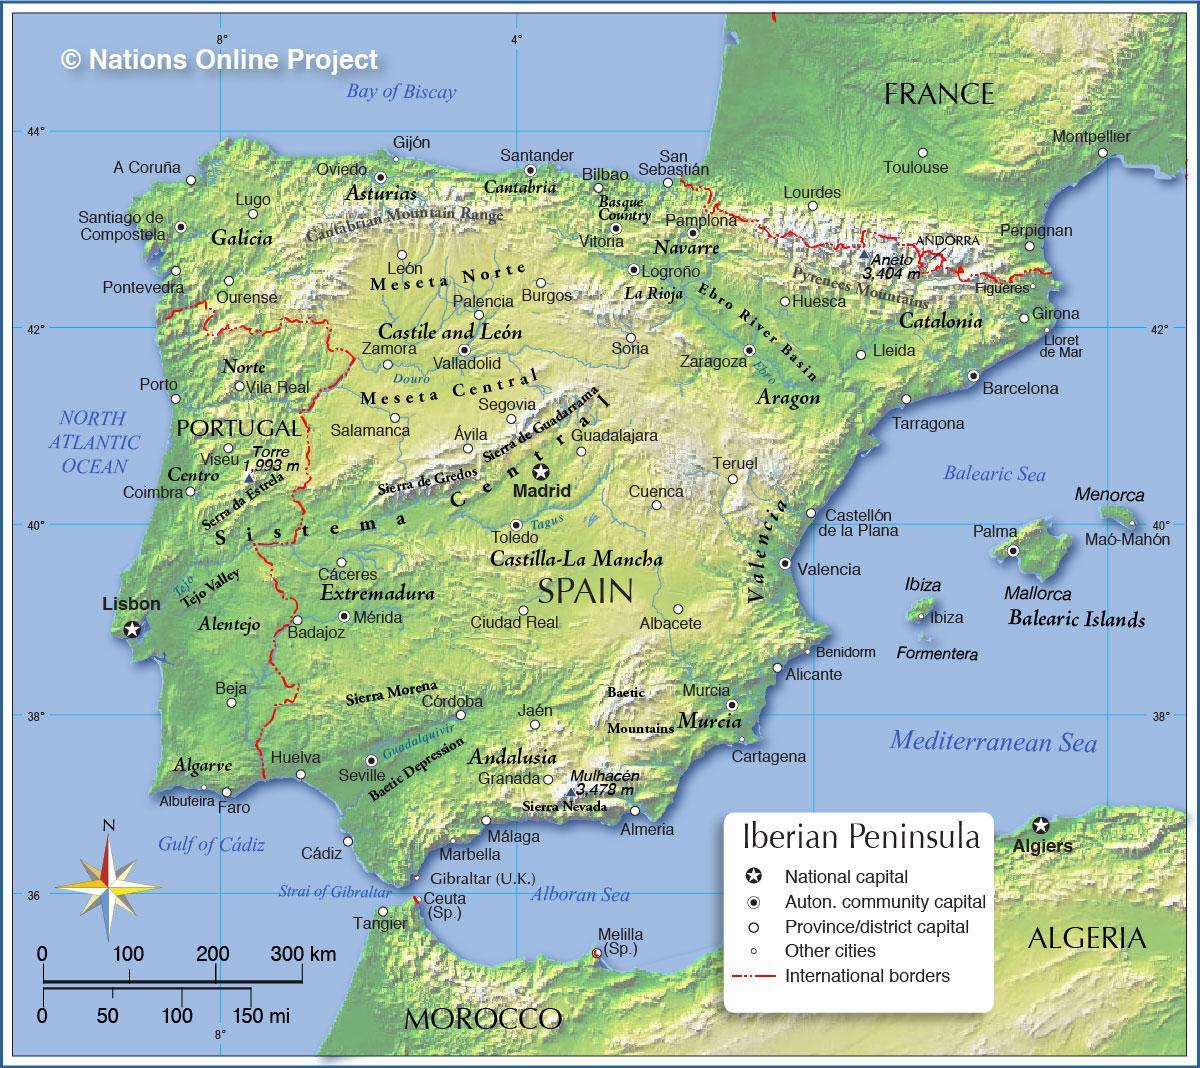 Mapa geográfico de Portugal: topografia e características físicas